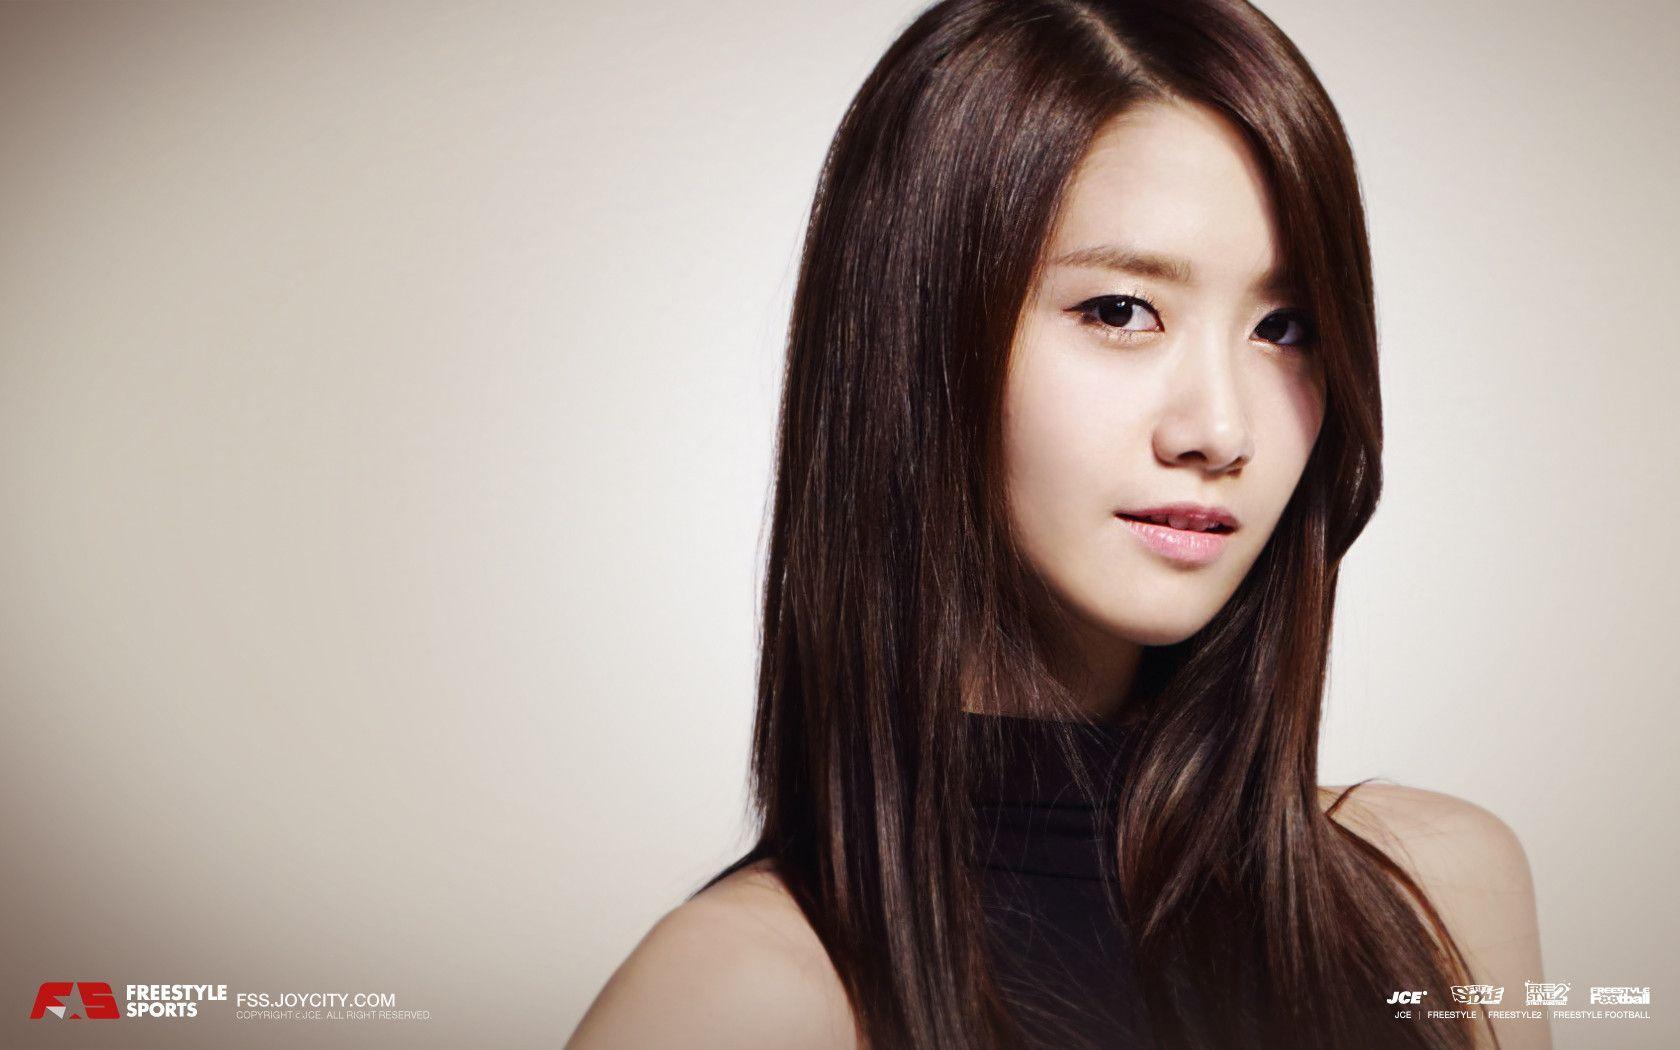 Yoona SNSD Wallpaper HD. hdwallpaper